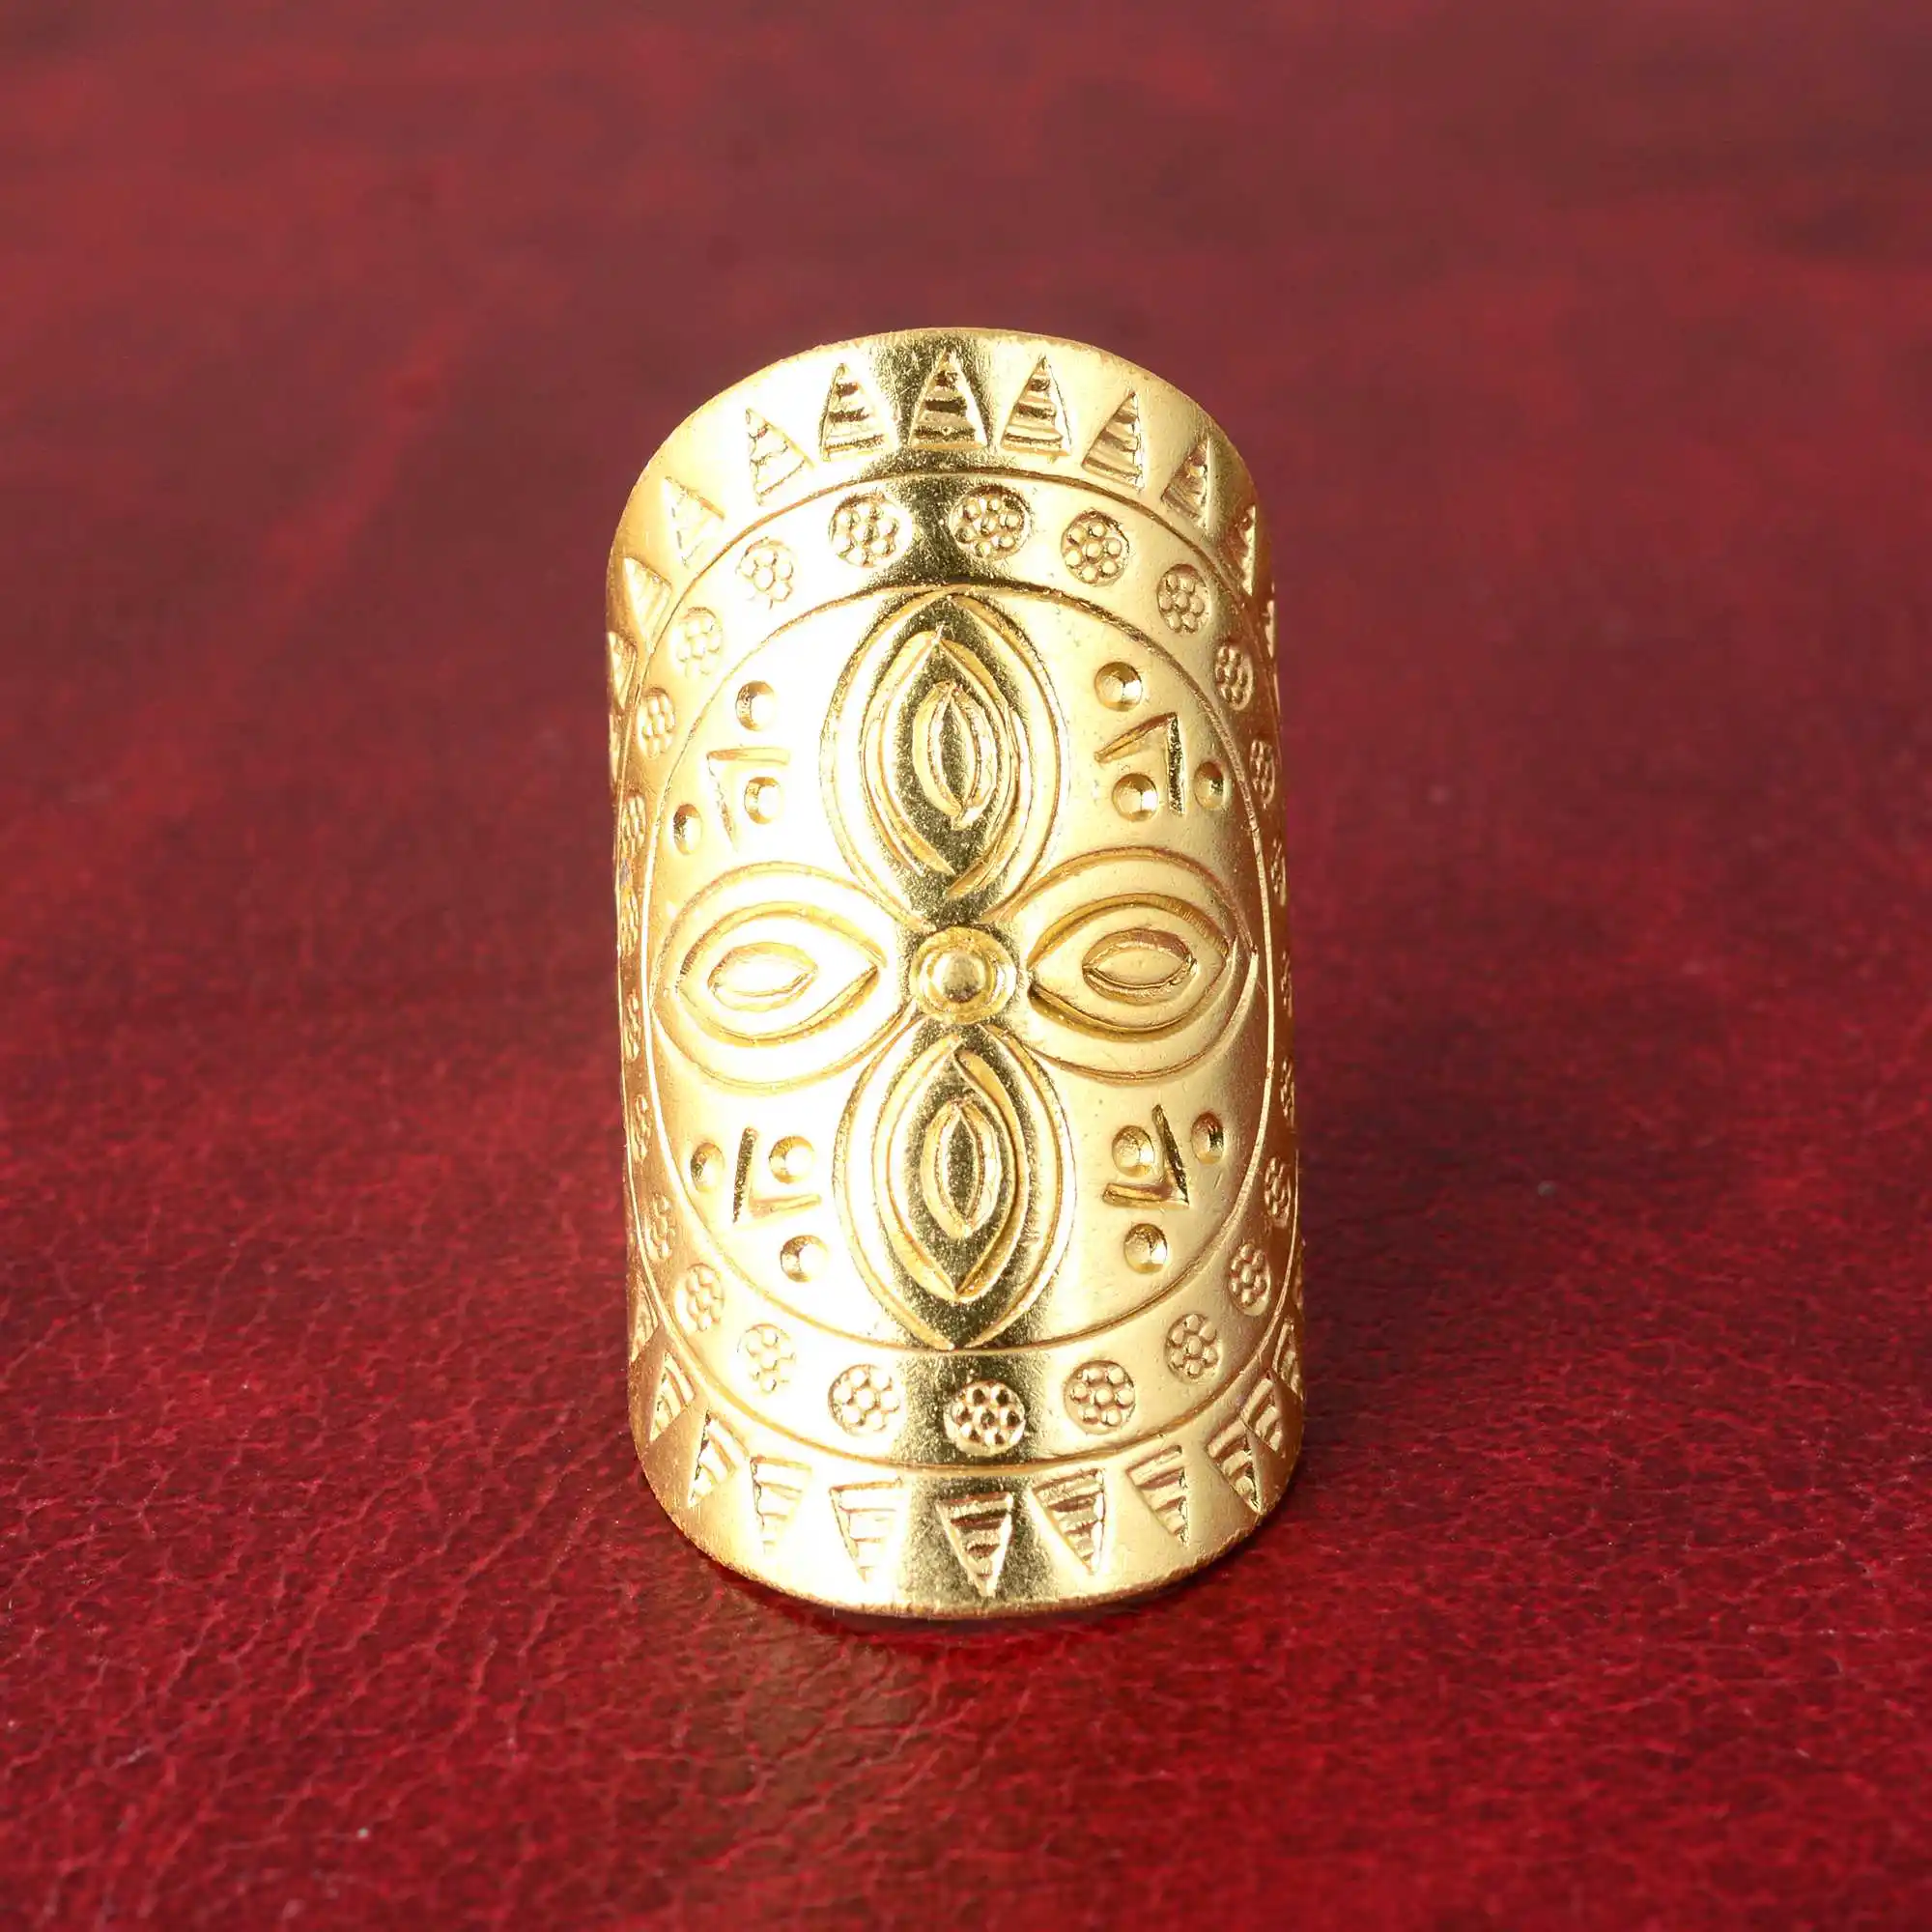 Nuevo producto, anillo griego antiguo ajustable de oro de 18 quilates, anillo de disco de Phaistos delicado no desteñido, joyería para mujer